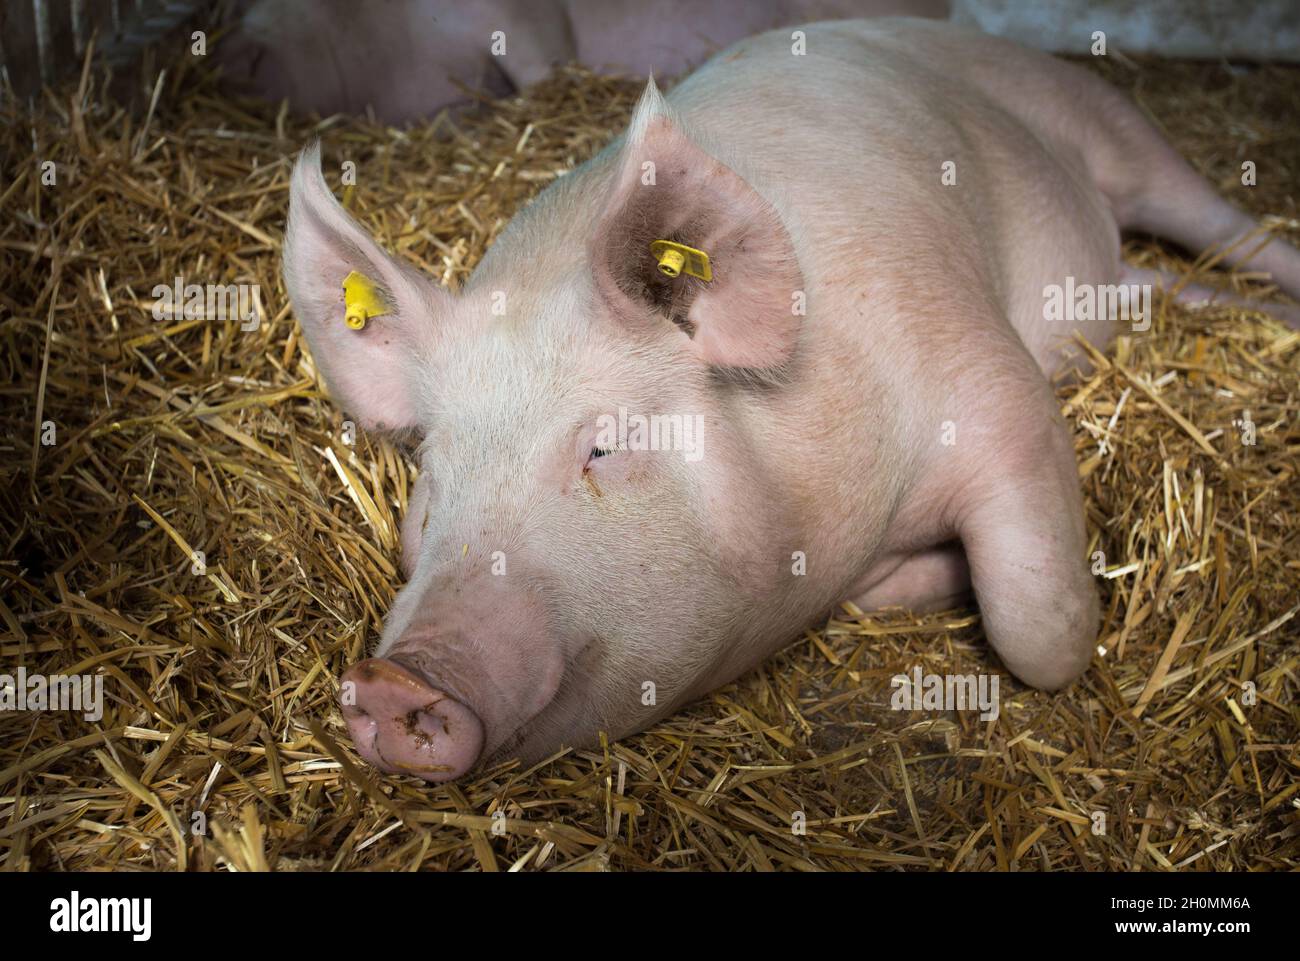 Pig (Large white swine) sleeping on straw in pen Stock Photo